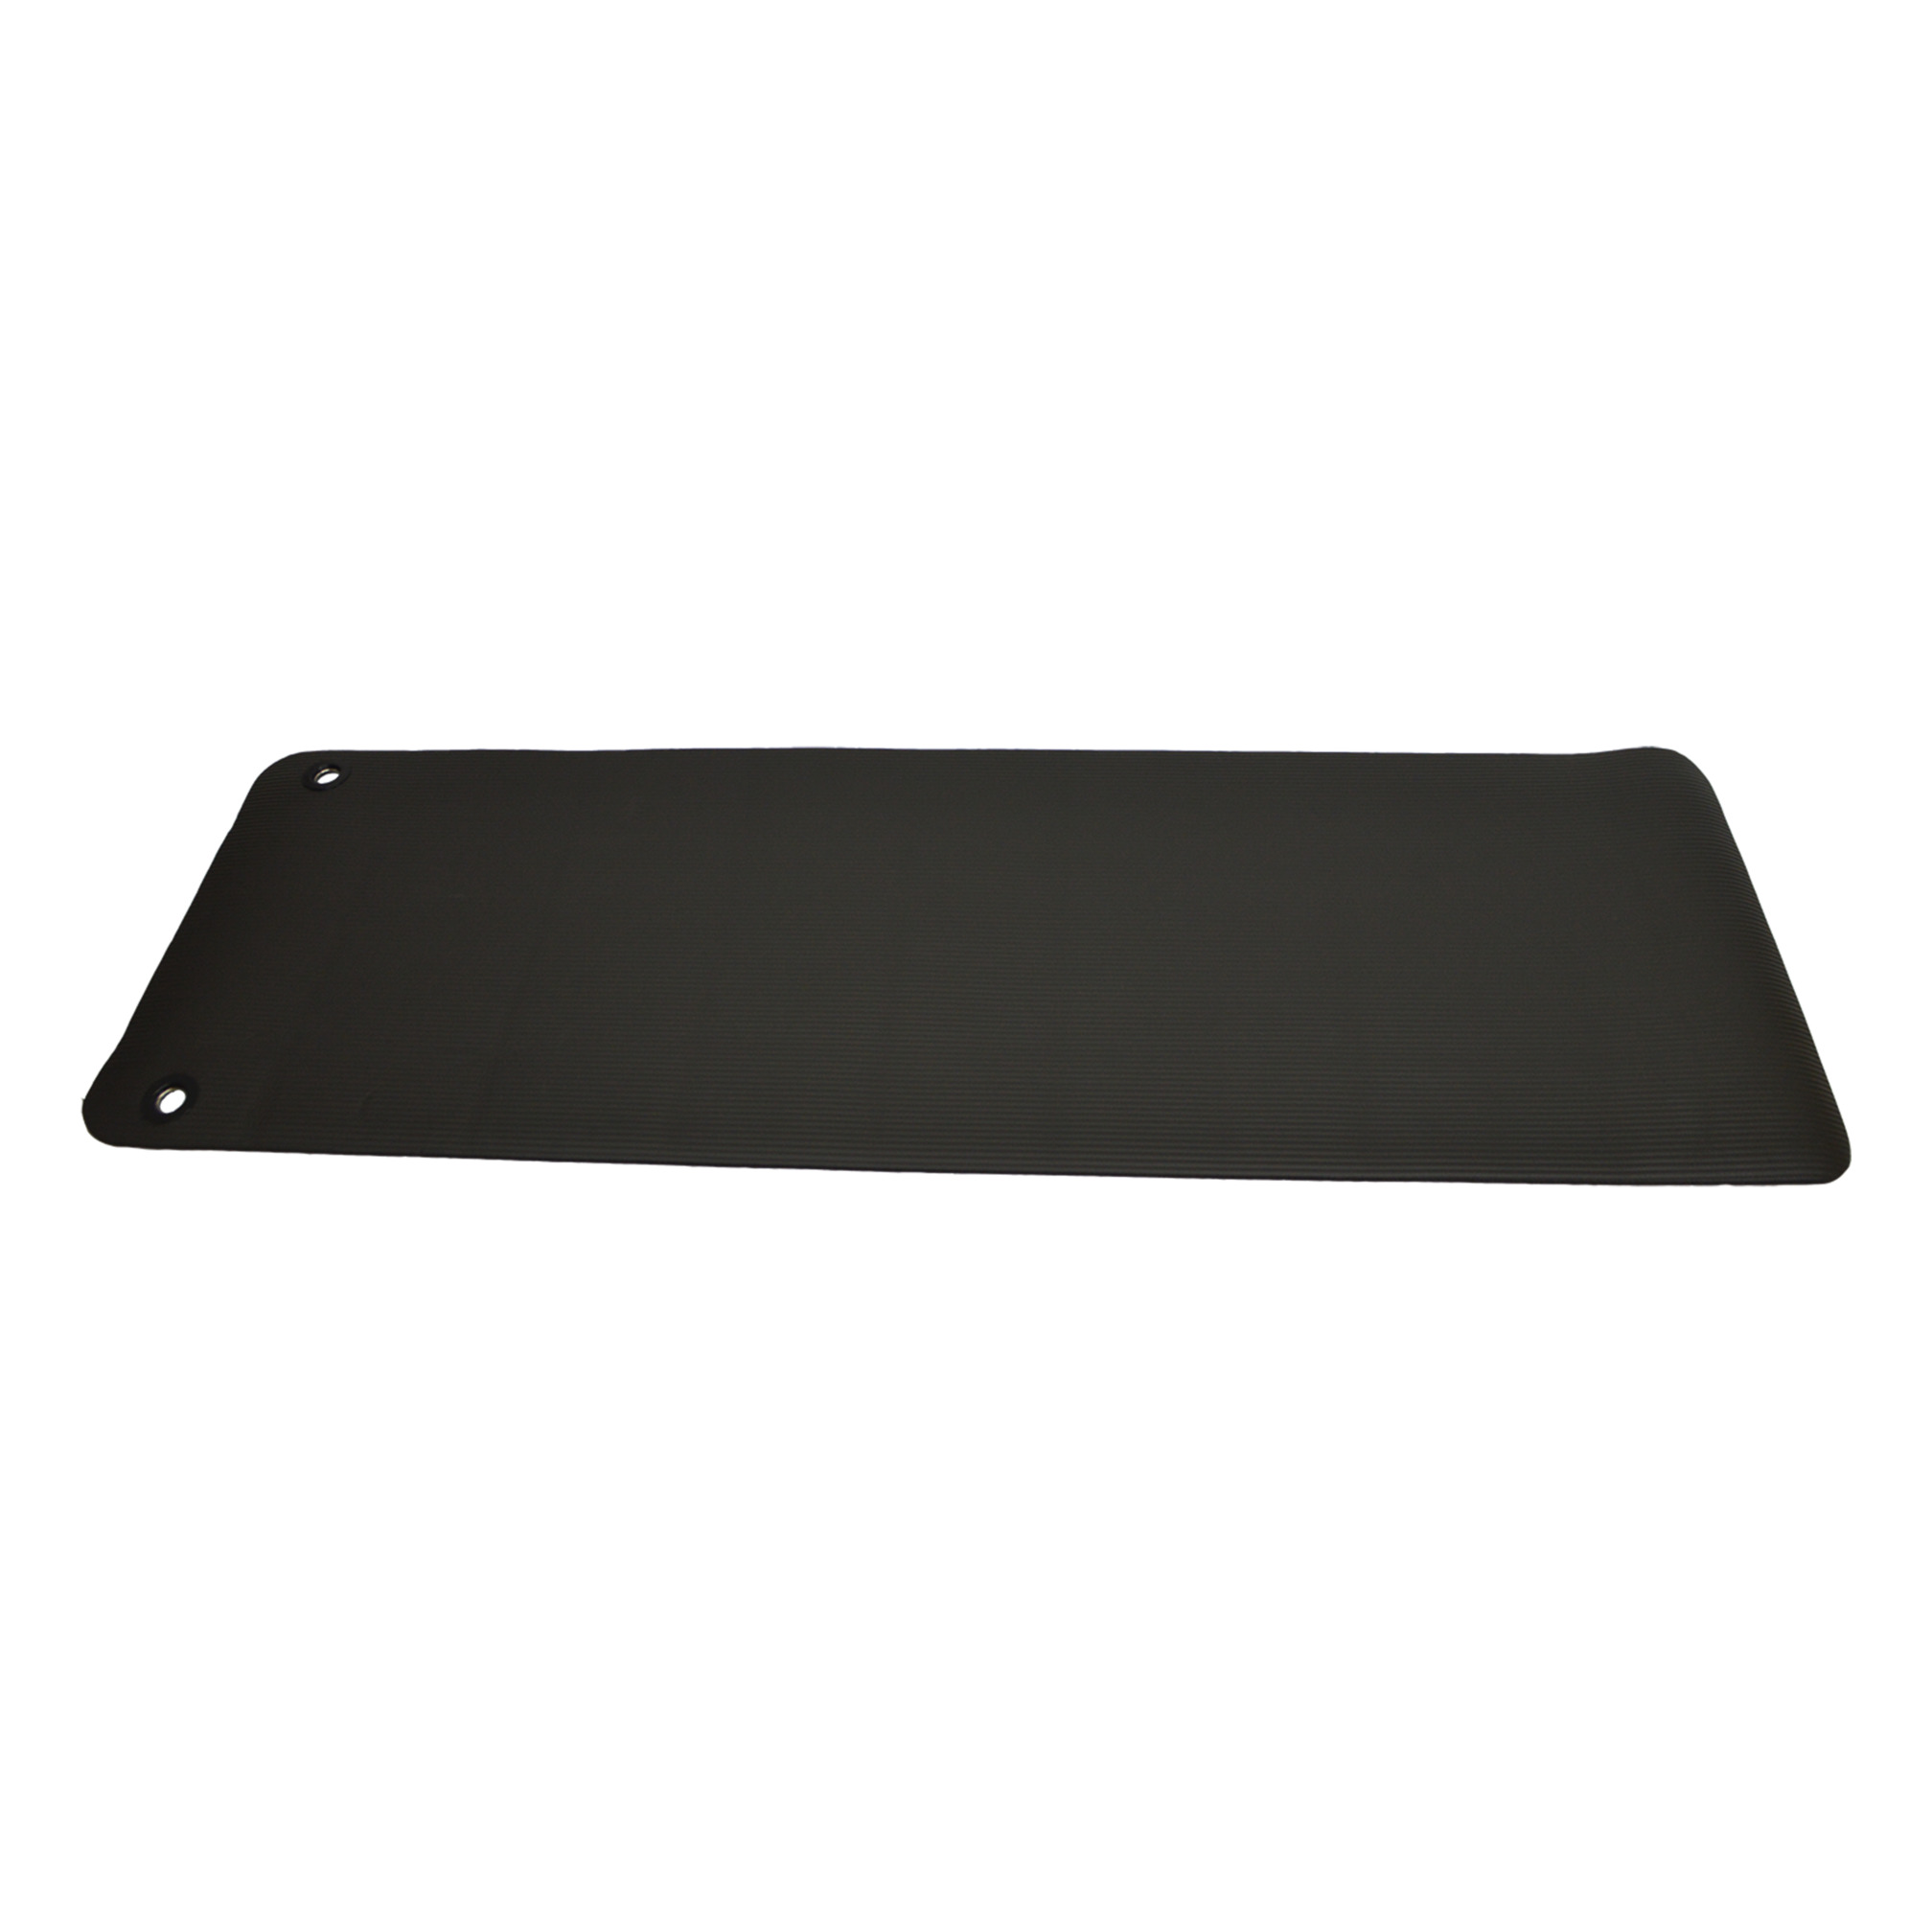 Yoga mat black 183 x 60 cm